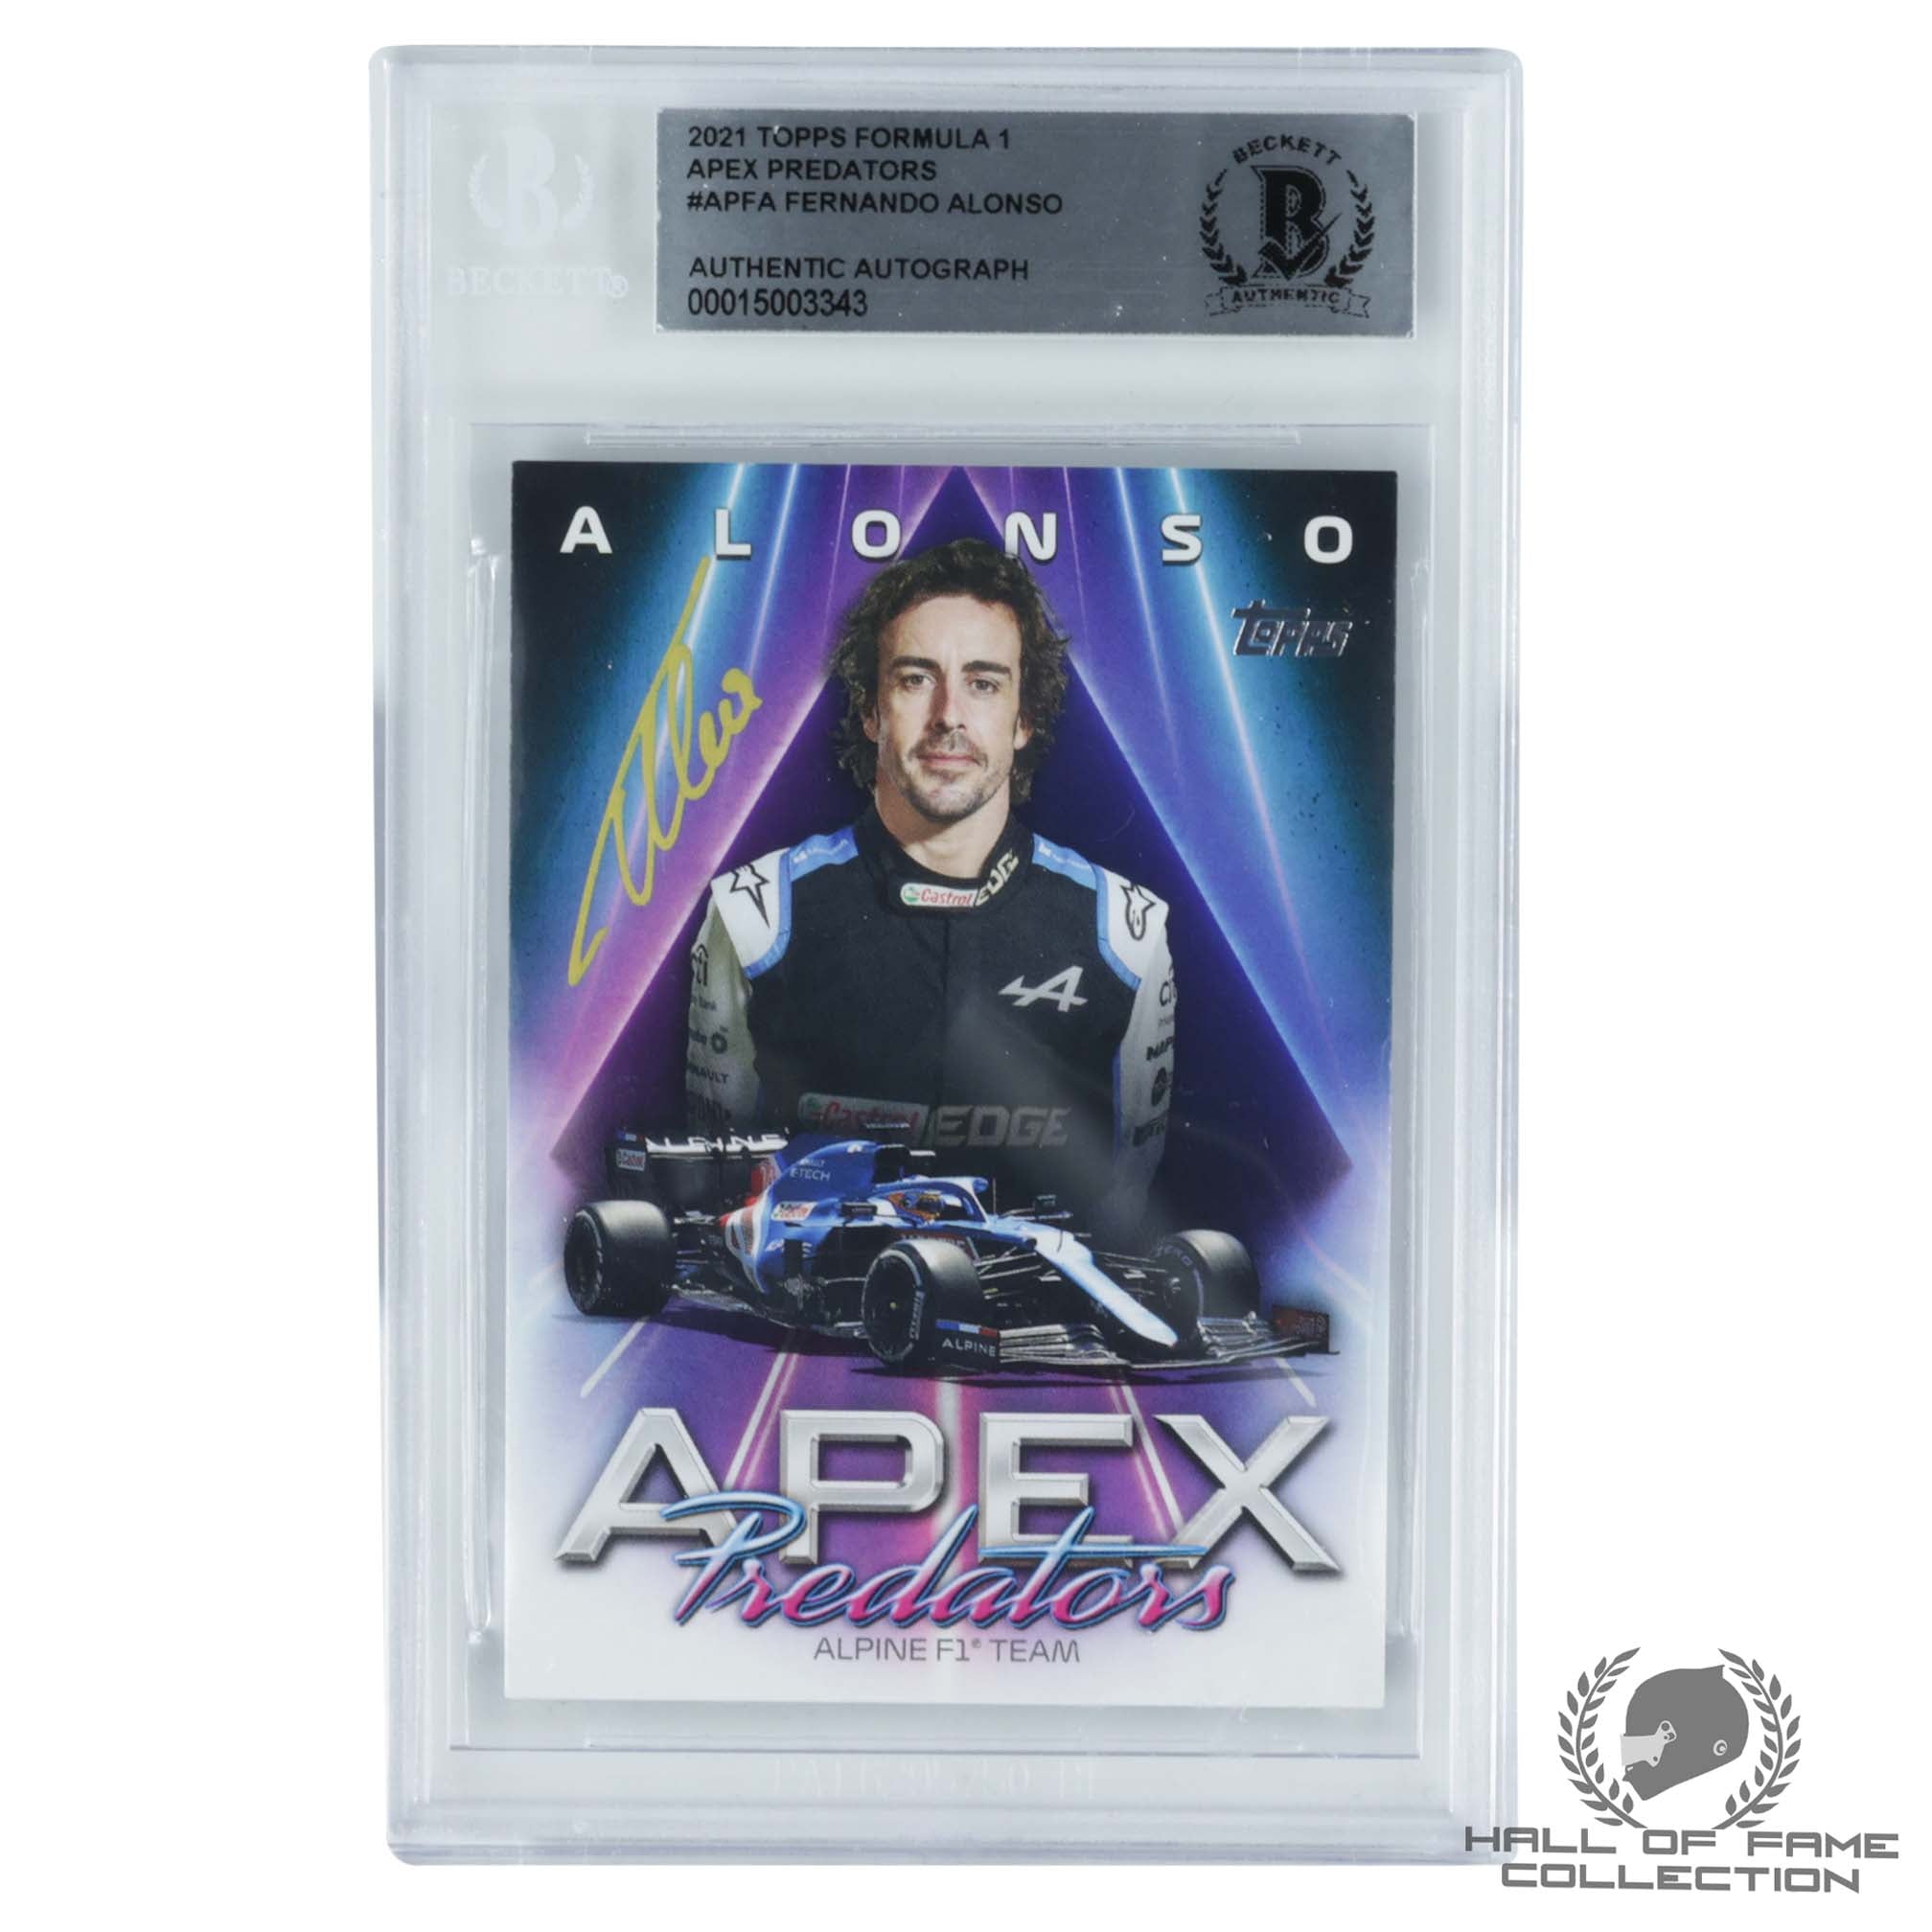 2021 Topps Formula 1 Apex Predators #APFA Fernando Alonso Authentic Autograph